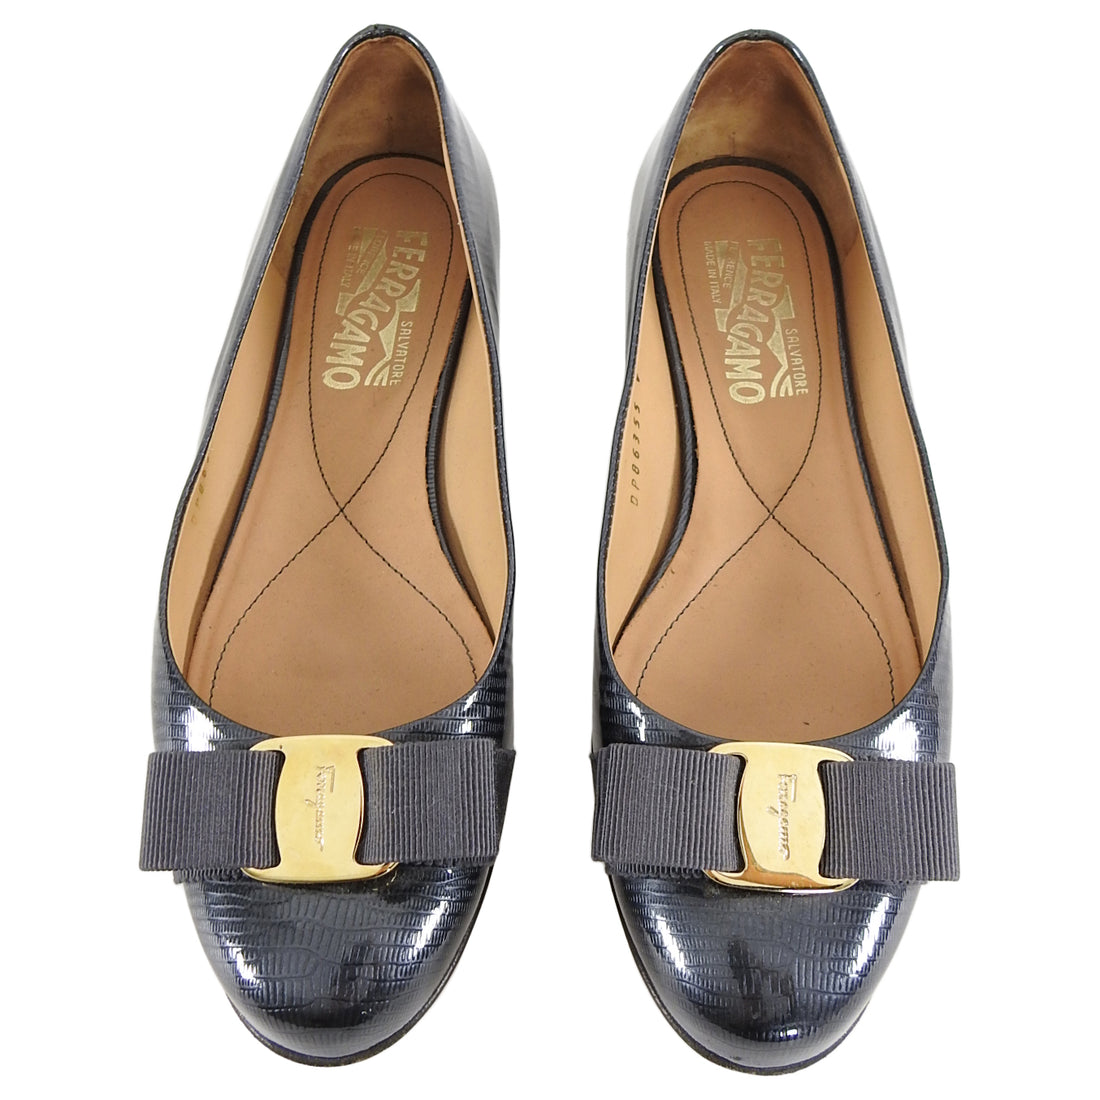 Ferragamo Charcoal Grey Patent Bow Flat Shoes - 6.5